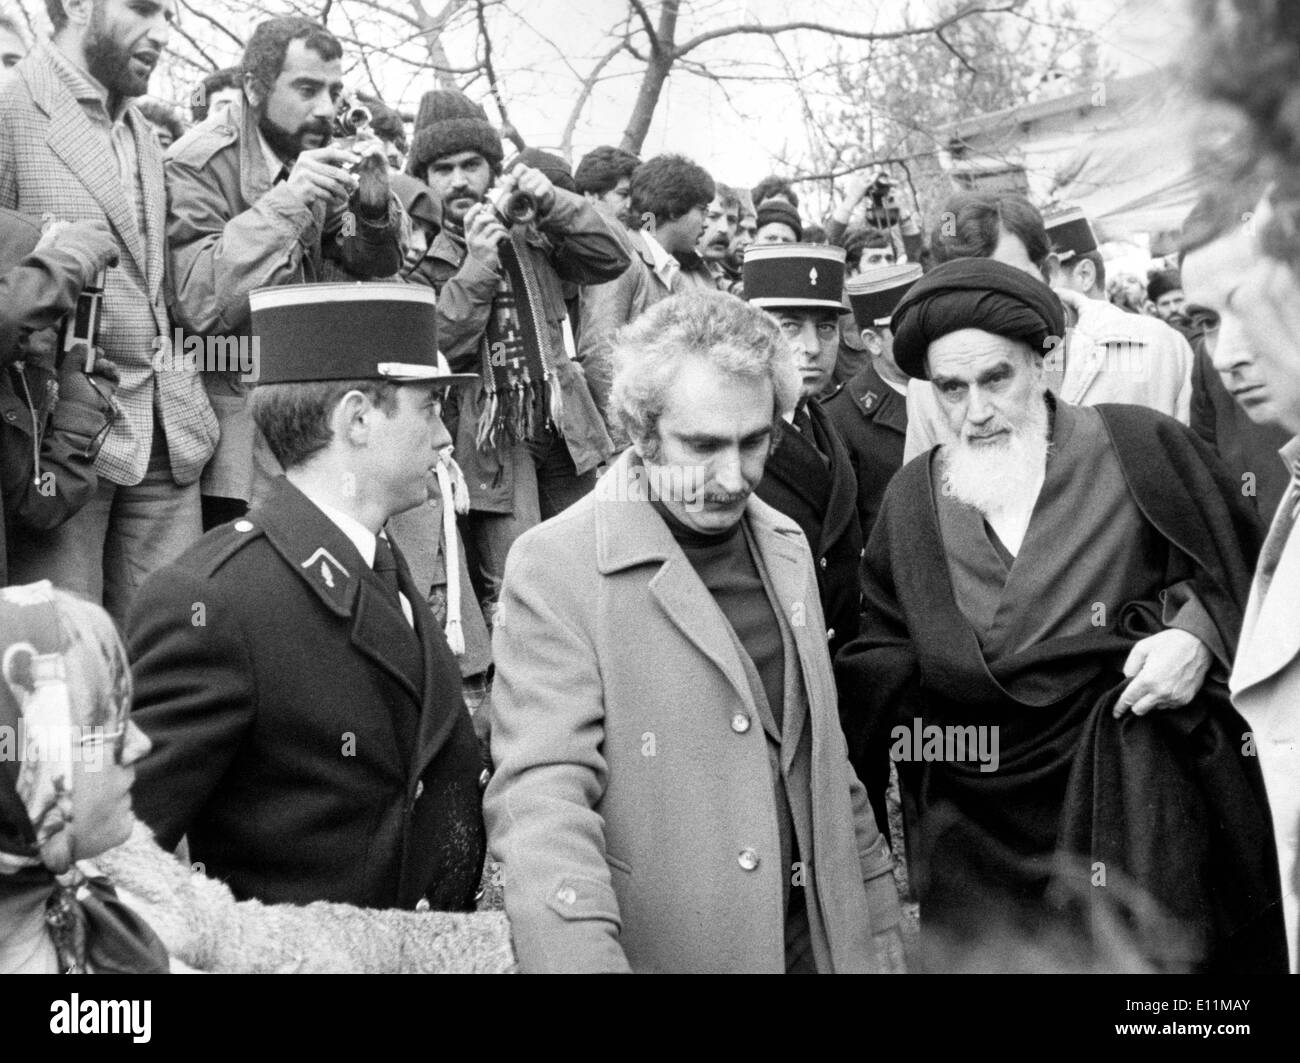 5527614 (900326) Ayatollah KHOMEINI (24.09.1902 - 03.06.1989, Ruhollah Mussawi HENDI) iranischer Religionsf hrer und Politiker, Stock Photo